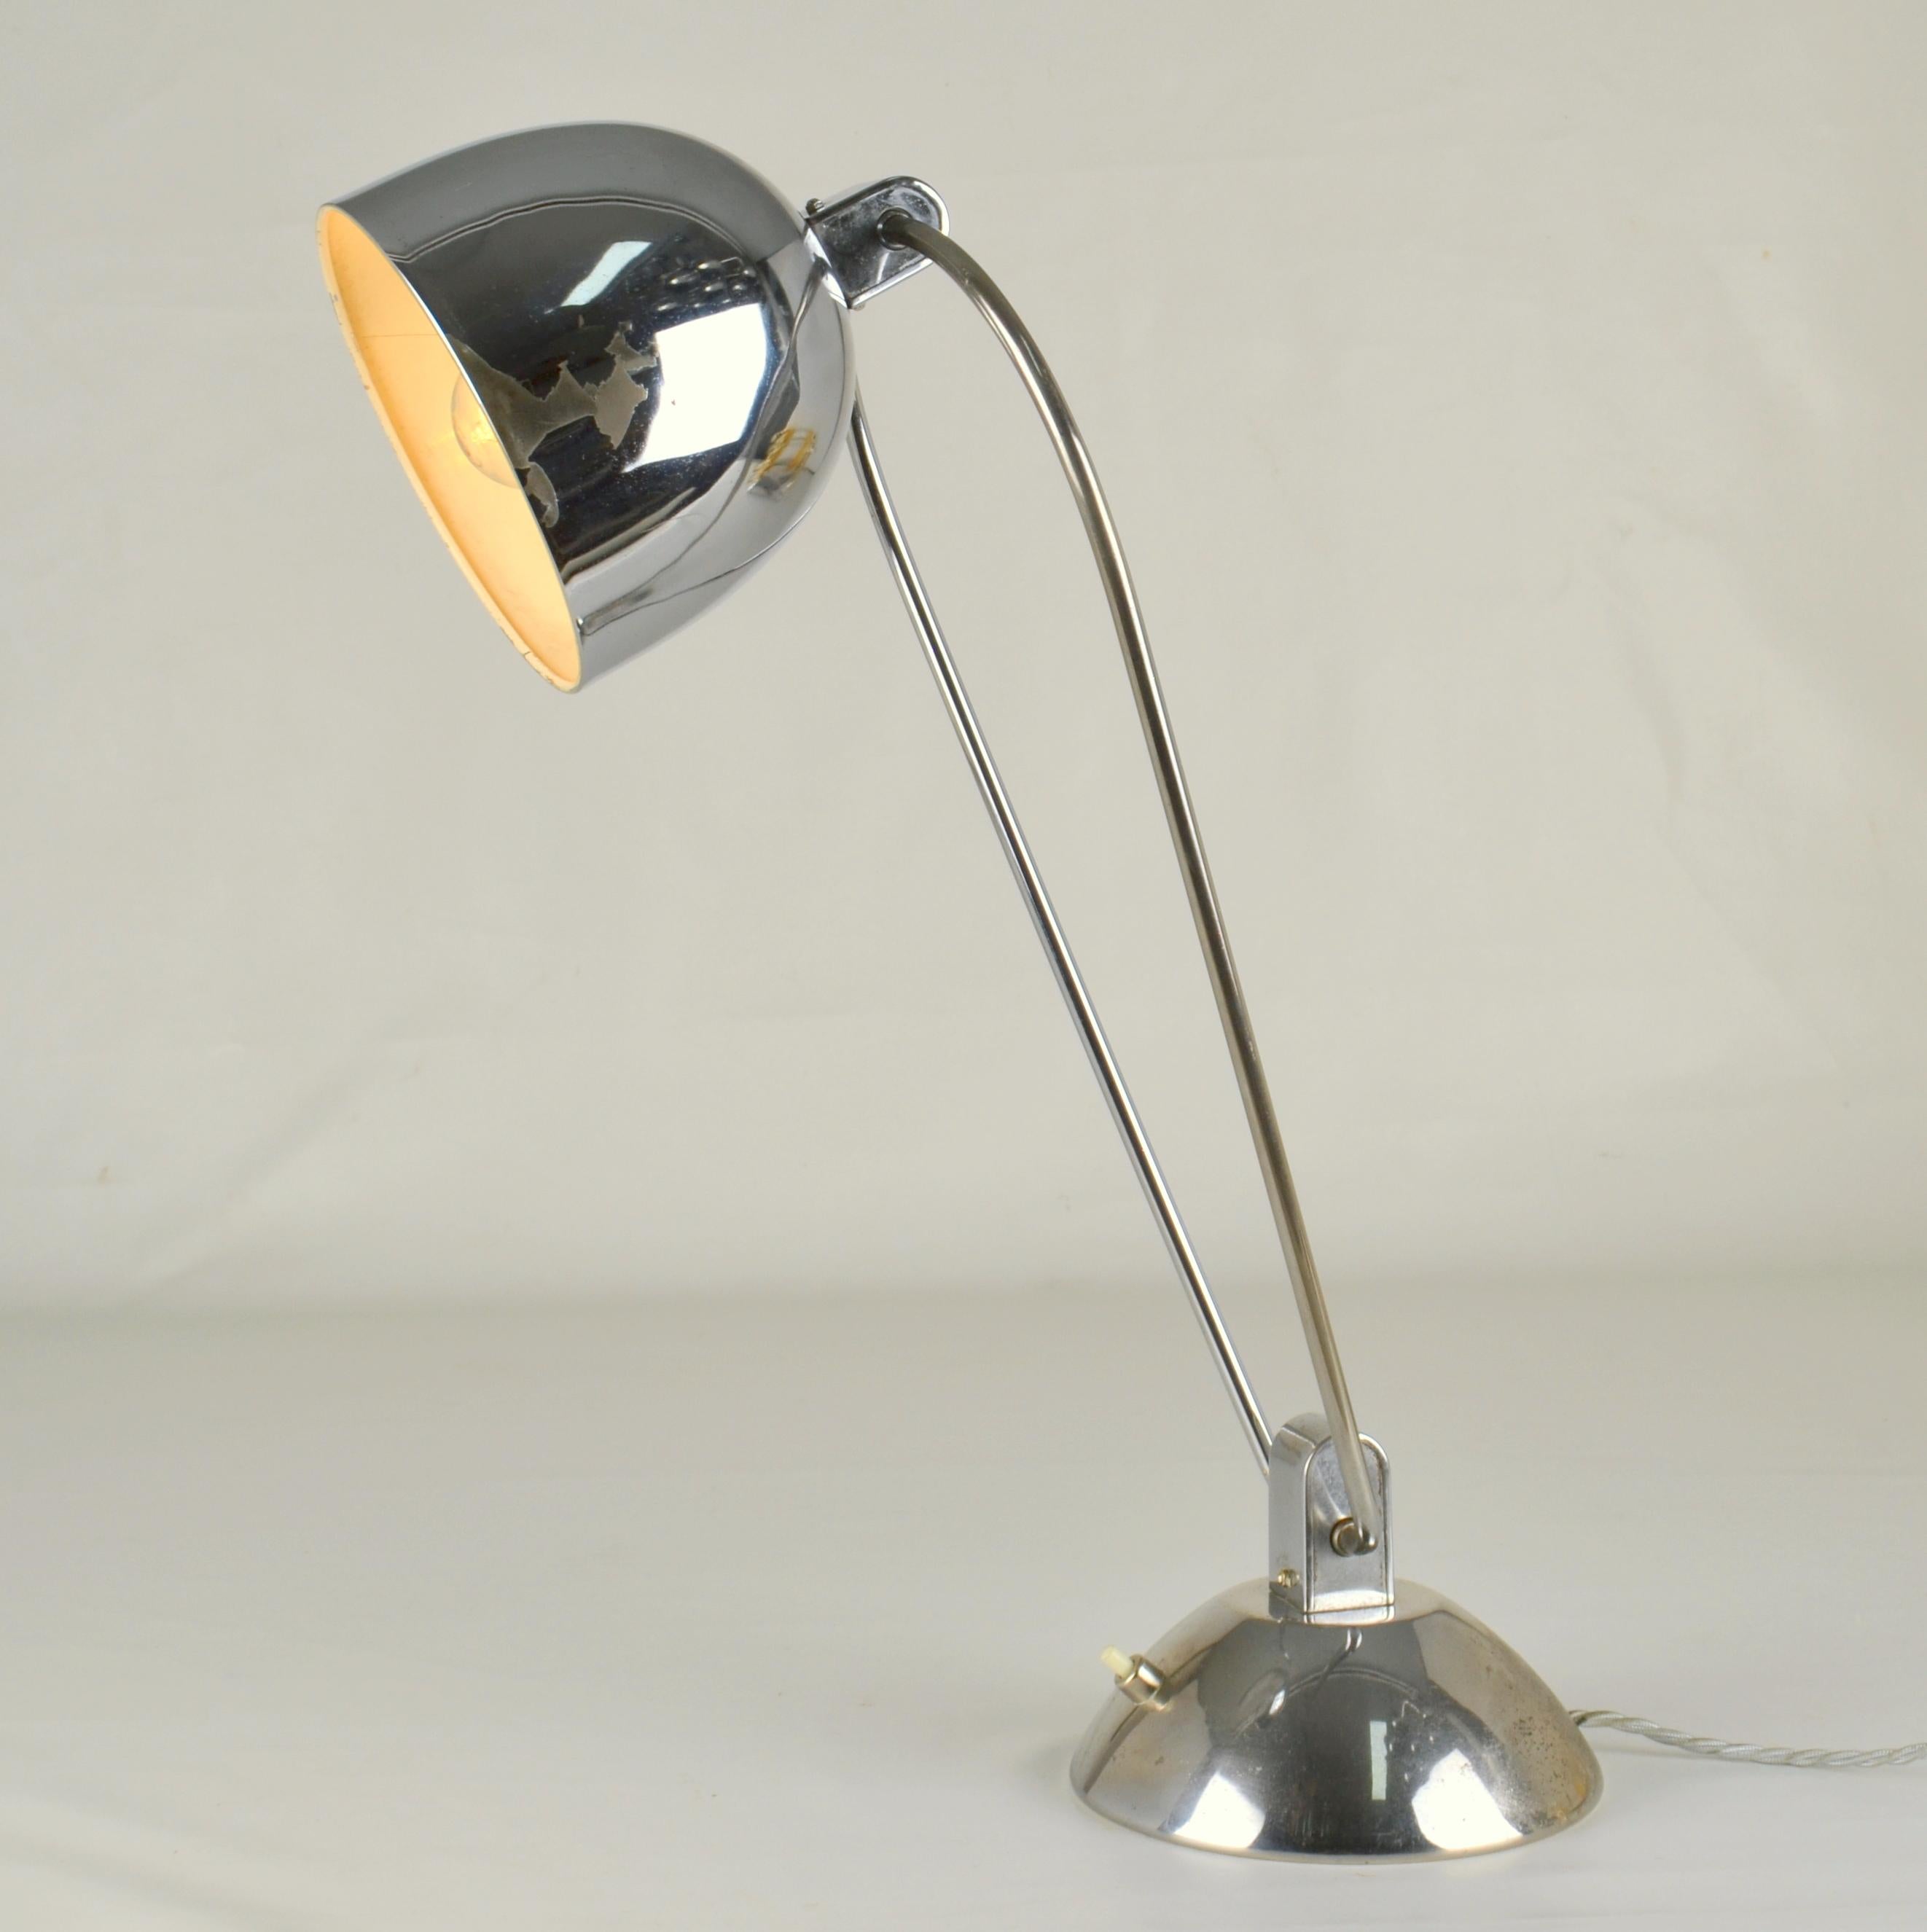  Modernist Desk Lamp Jumo designed by Yves Jujeau and André Mounique For Sale 2